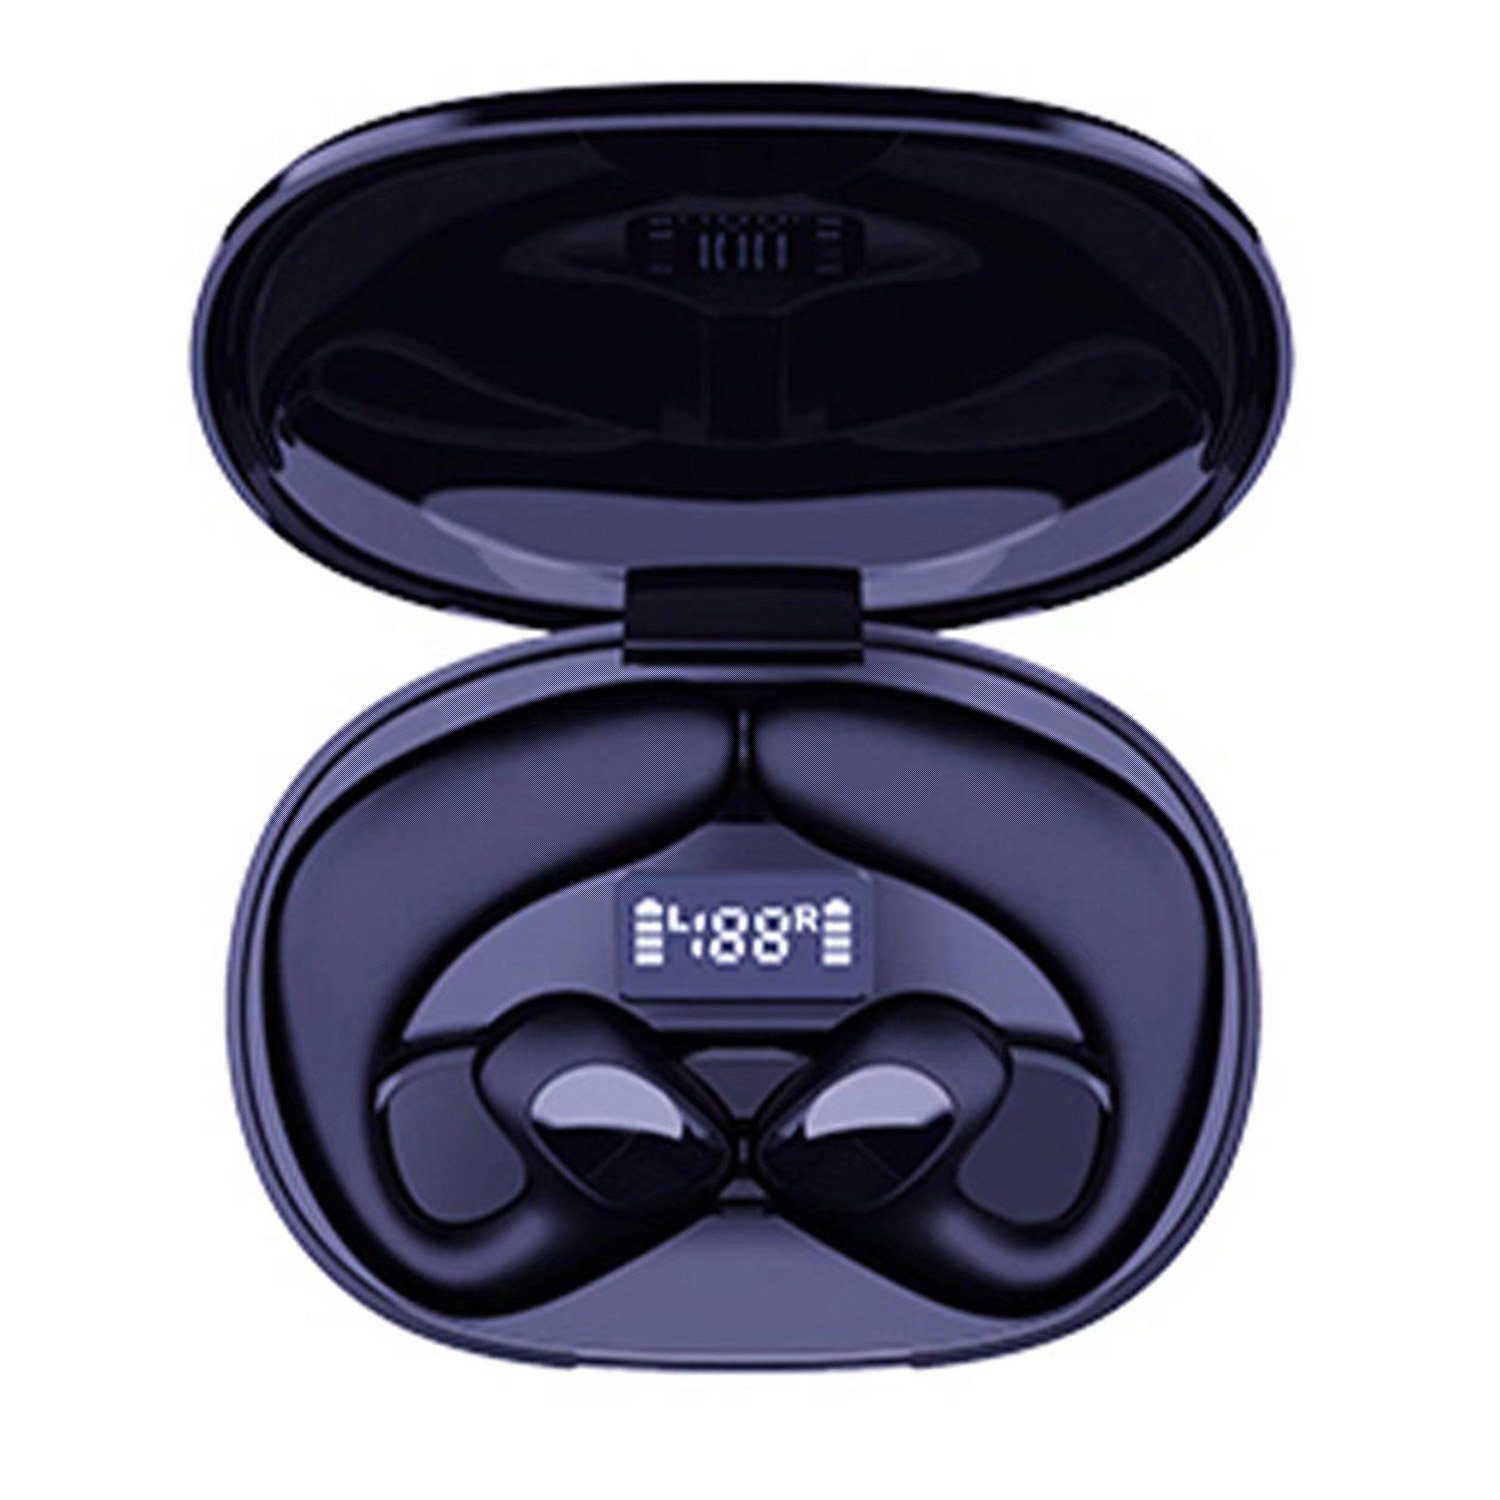 MAGICSHE Knochenleitungs-Headset 5.1 Bluetooth-Kopfhörer (Bluetooth) Blau | Kopfhörer